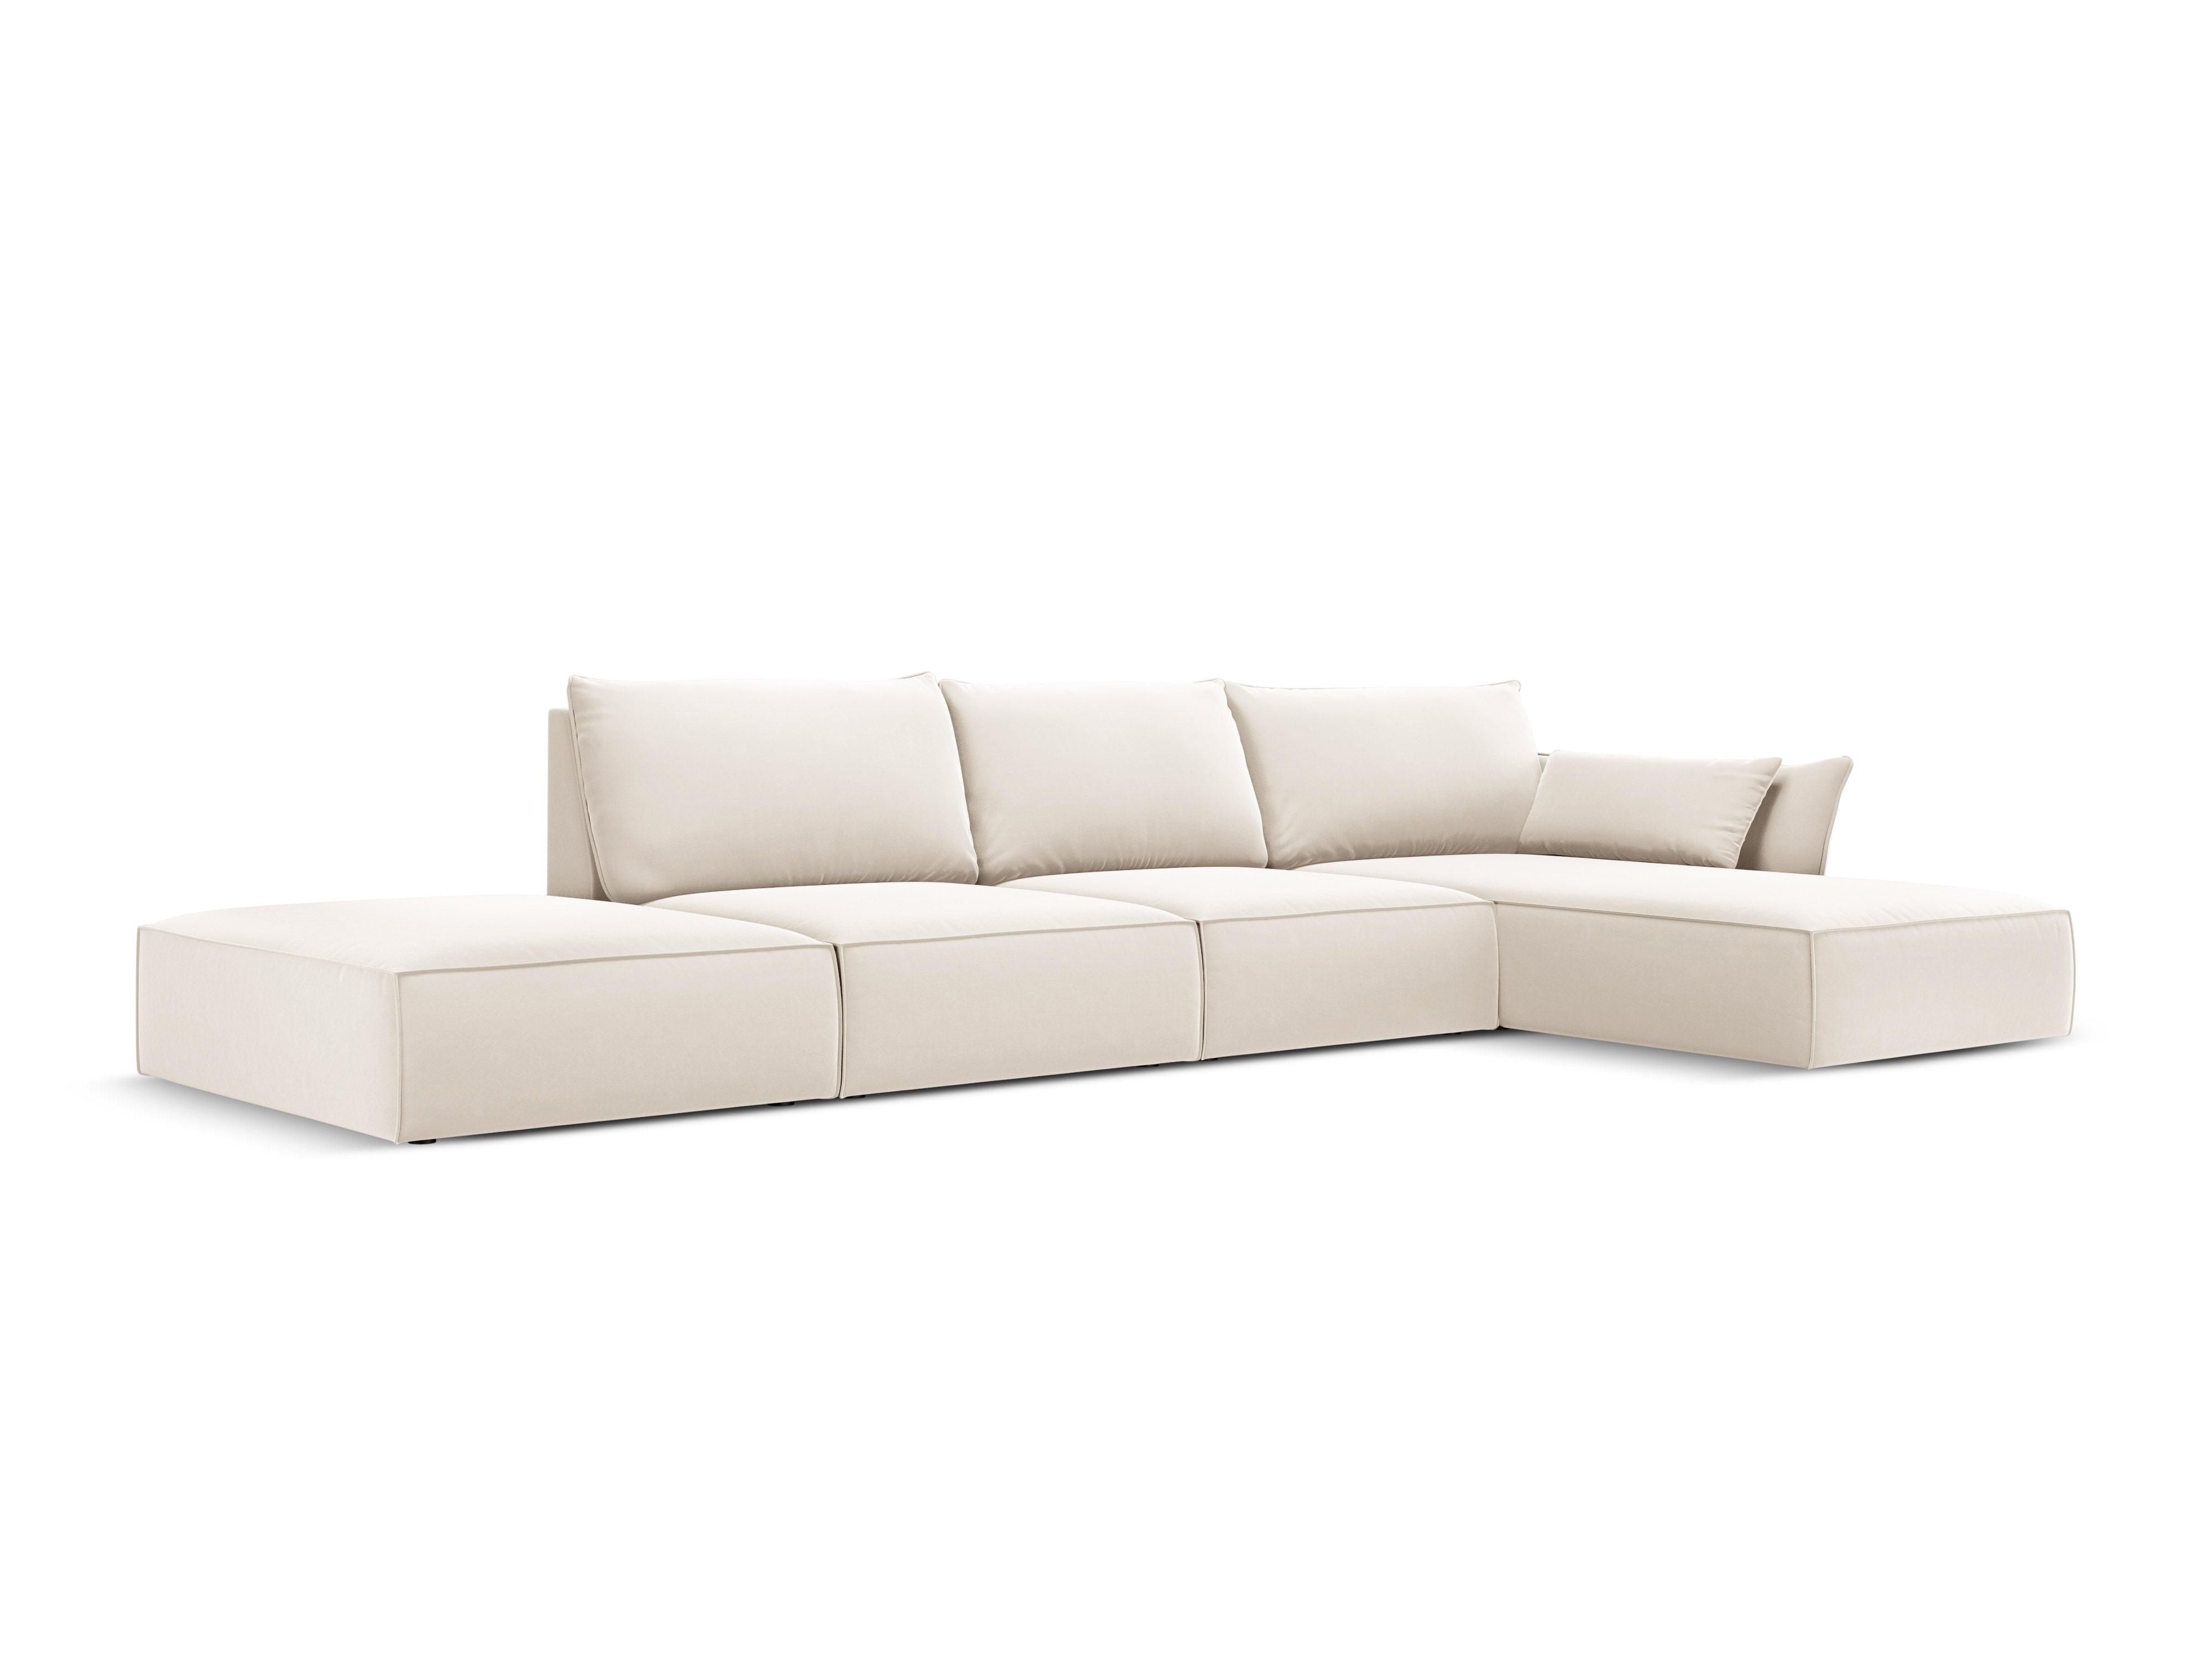 Velvet Right Corner Sofa, "Vanda", 5 Seats, 386x166x85
Made in Europe, Mazzini Sofas, Eye on Design